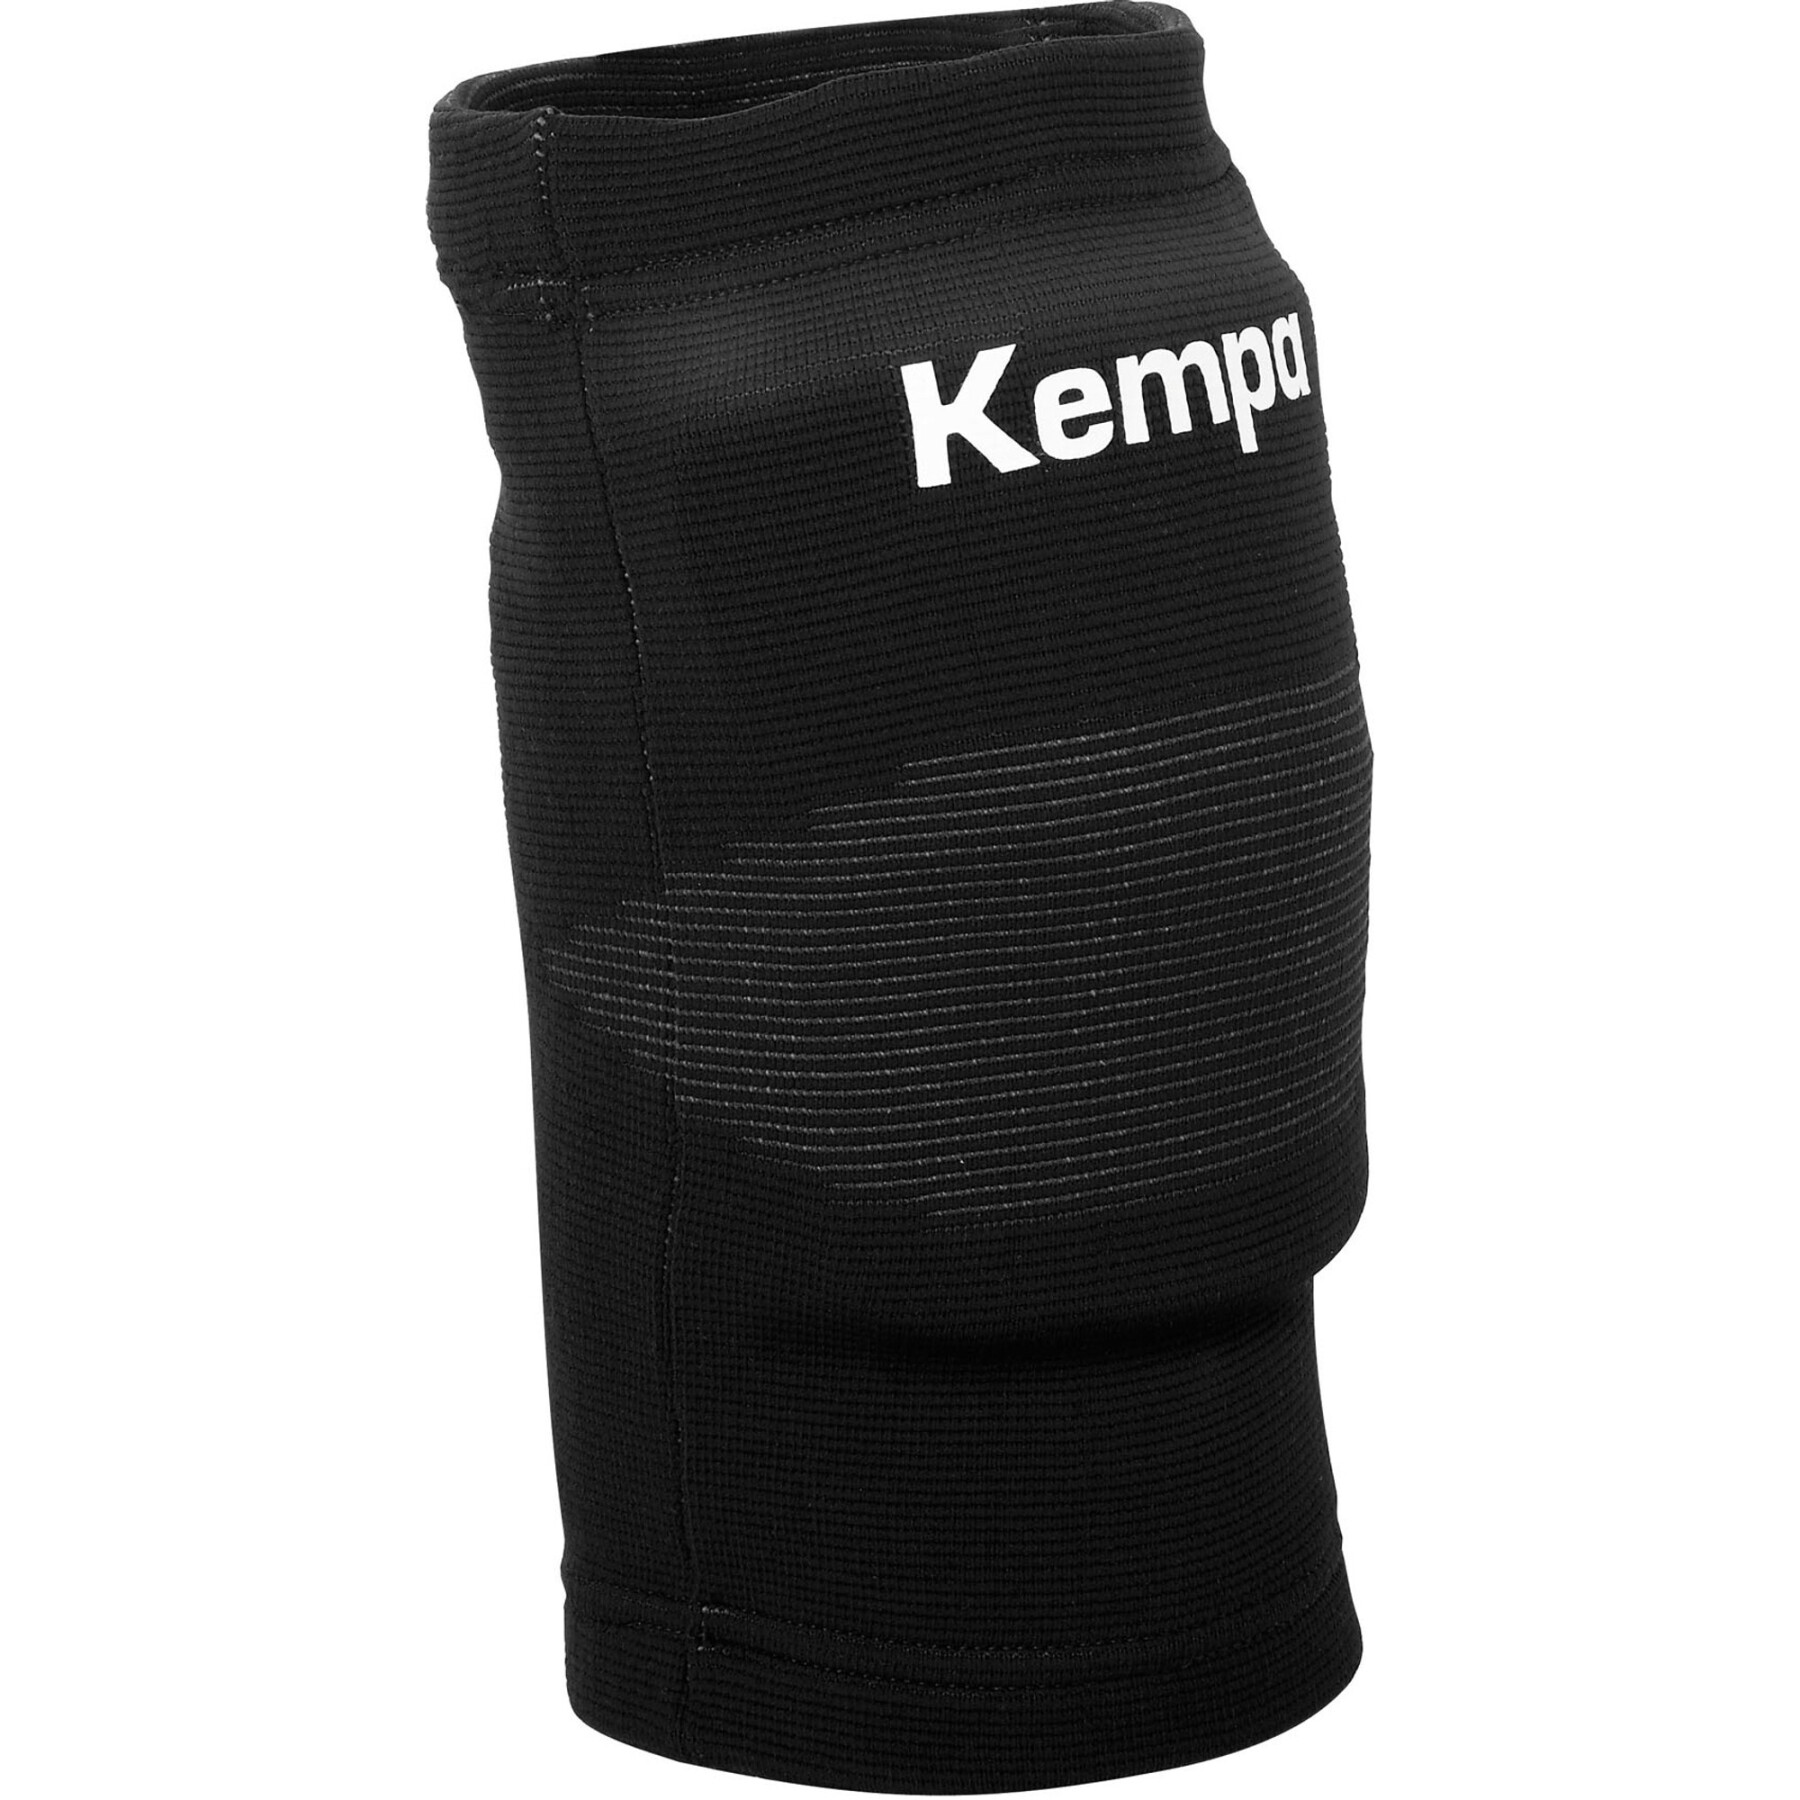 Kniebeschermers Kempa Bandage renforcée (x2)